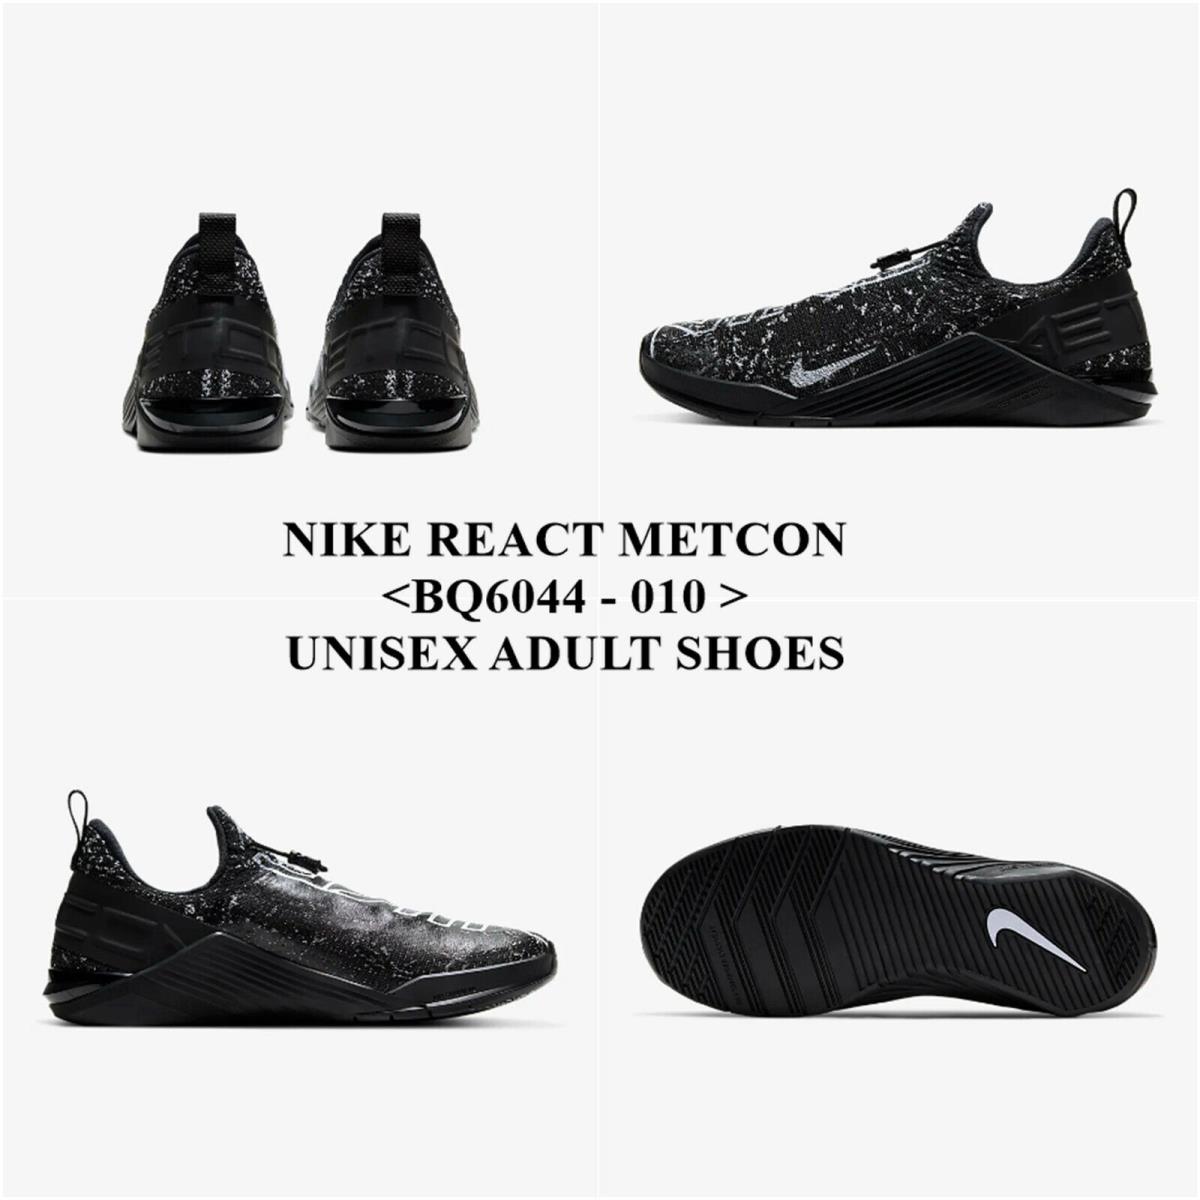 Nike React Metcon BQ6044 - 010 Unisex Training Shoes.new - BLACK / WHITE-BLACK